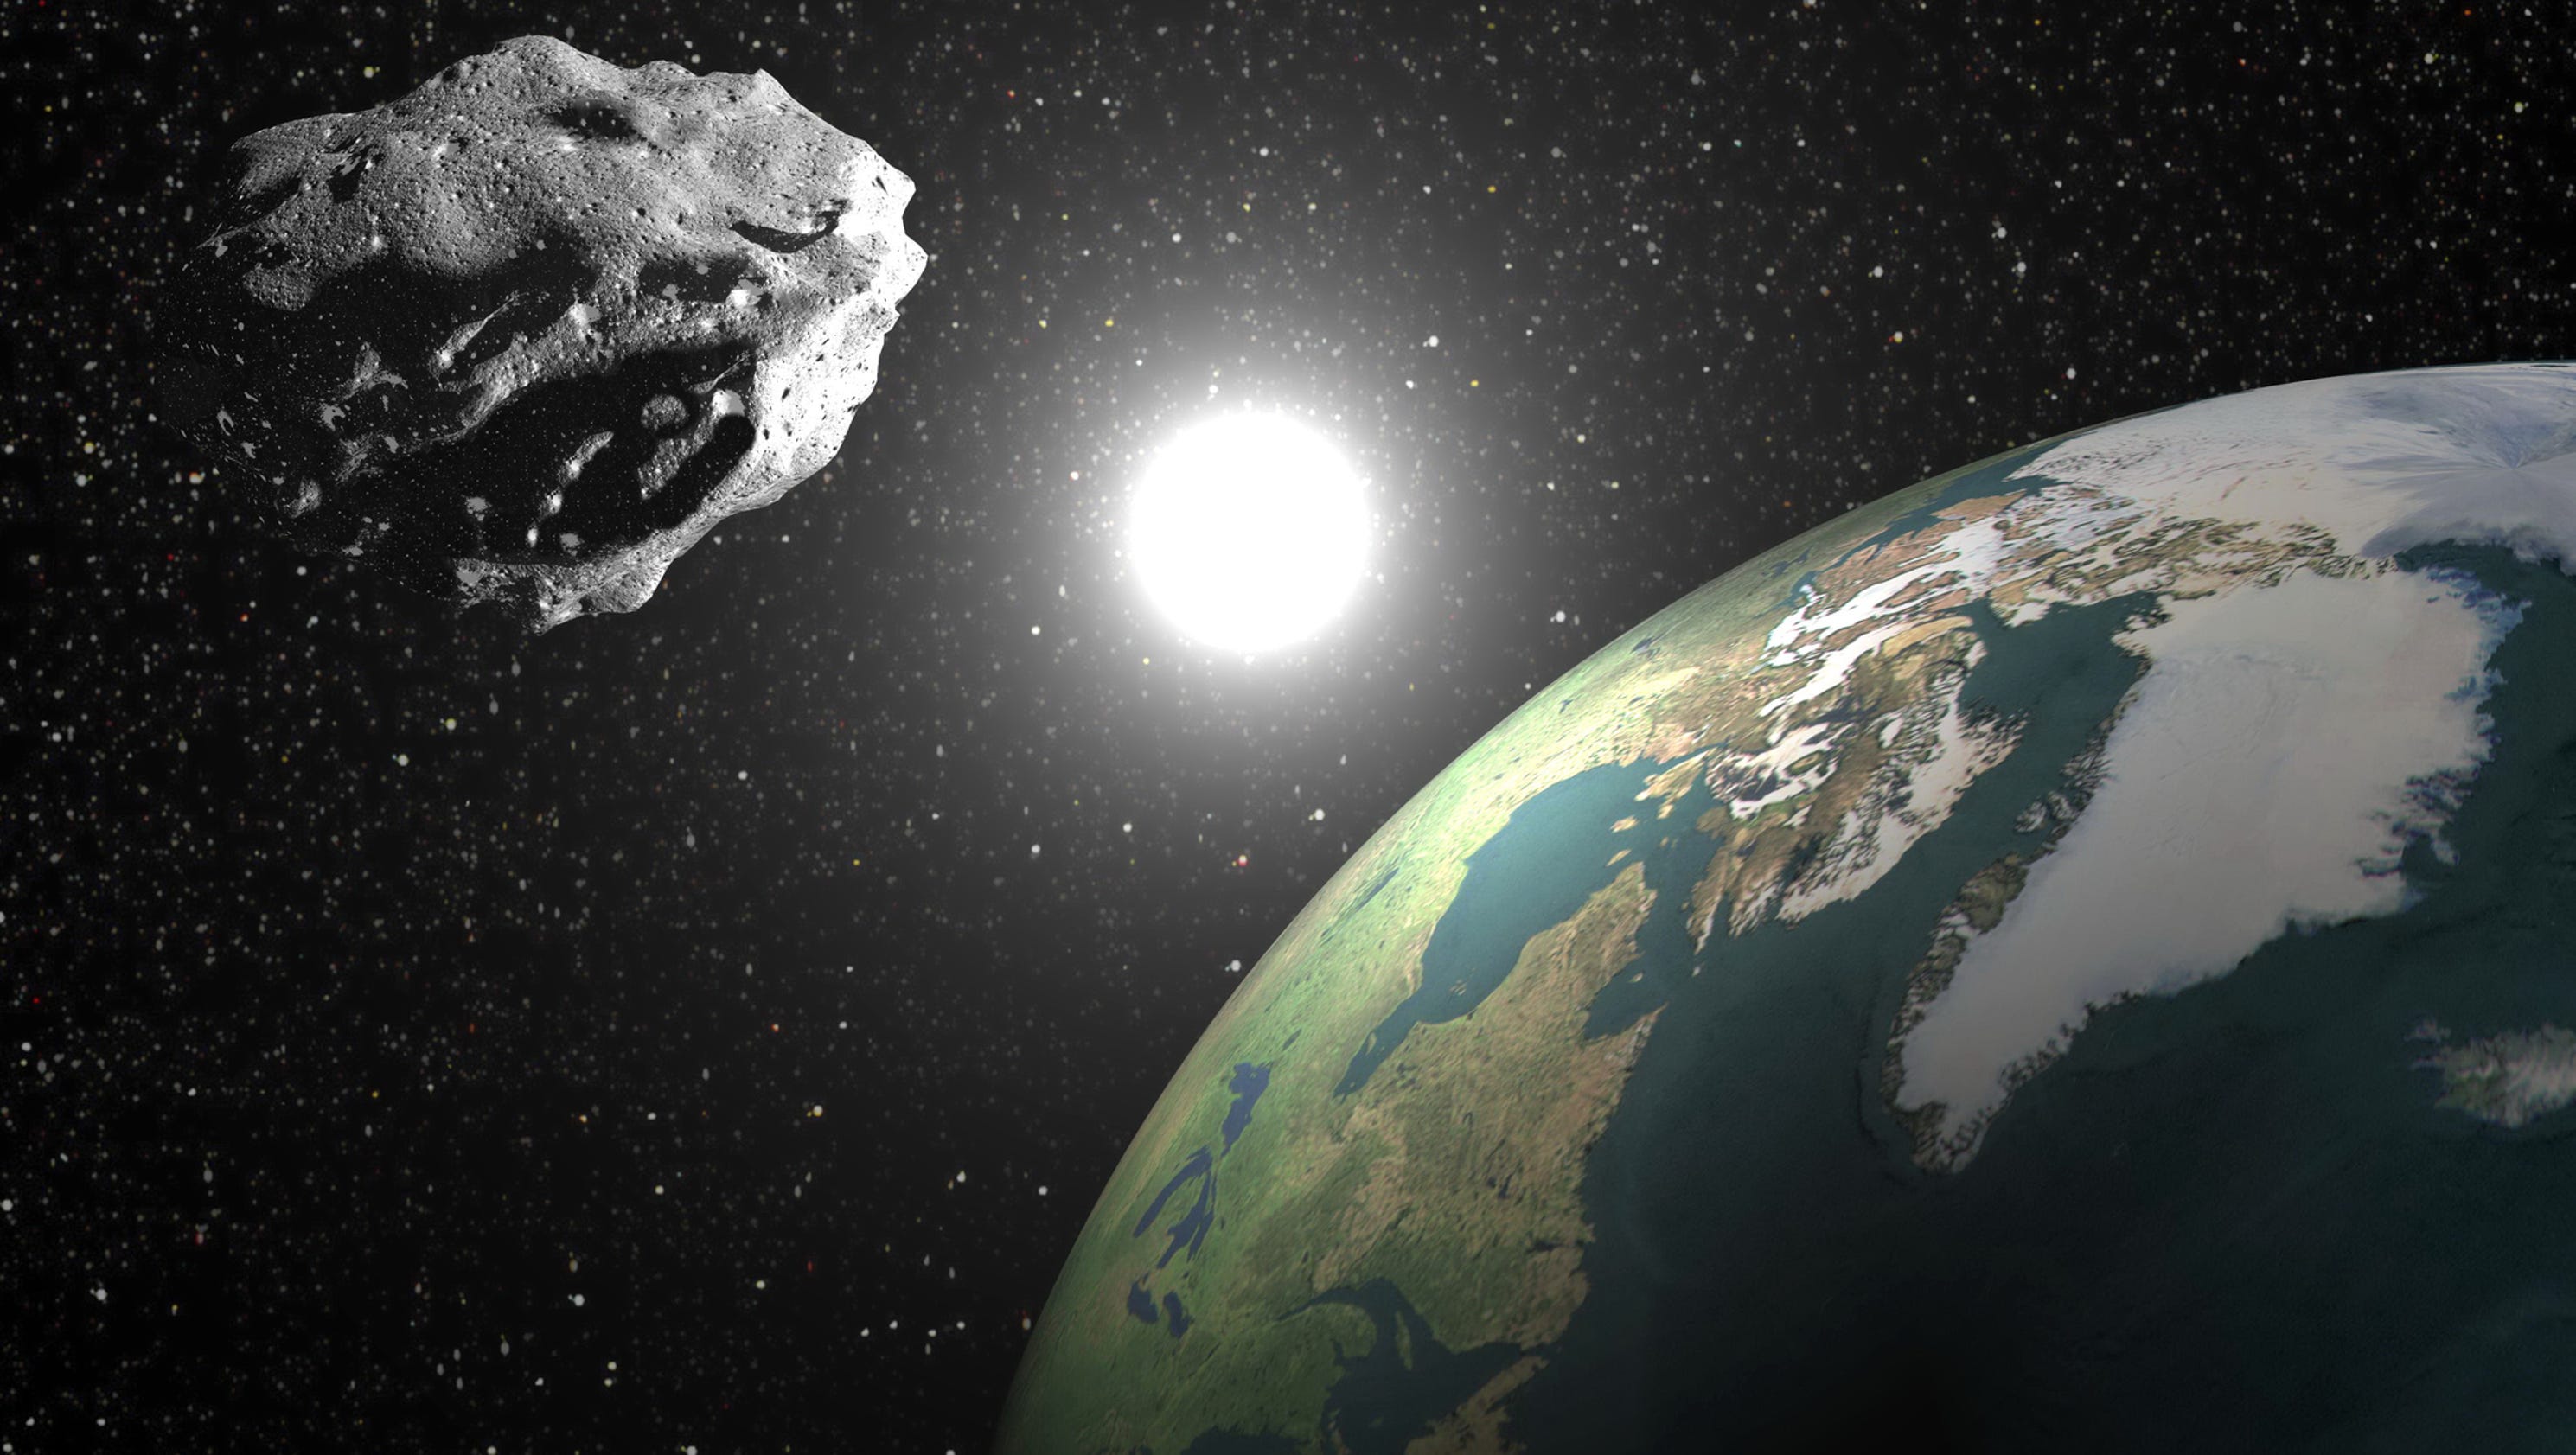 'Potentially Hazardous Asteroid' will pass Earth on Super Bowl Sunday